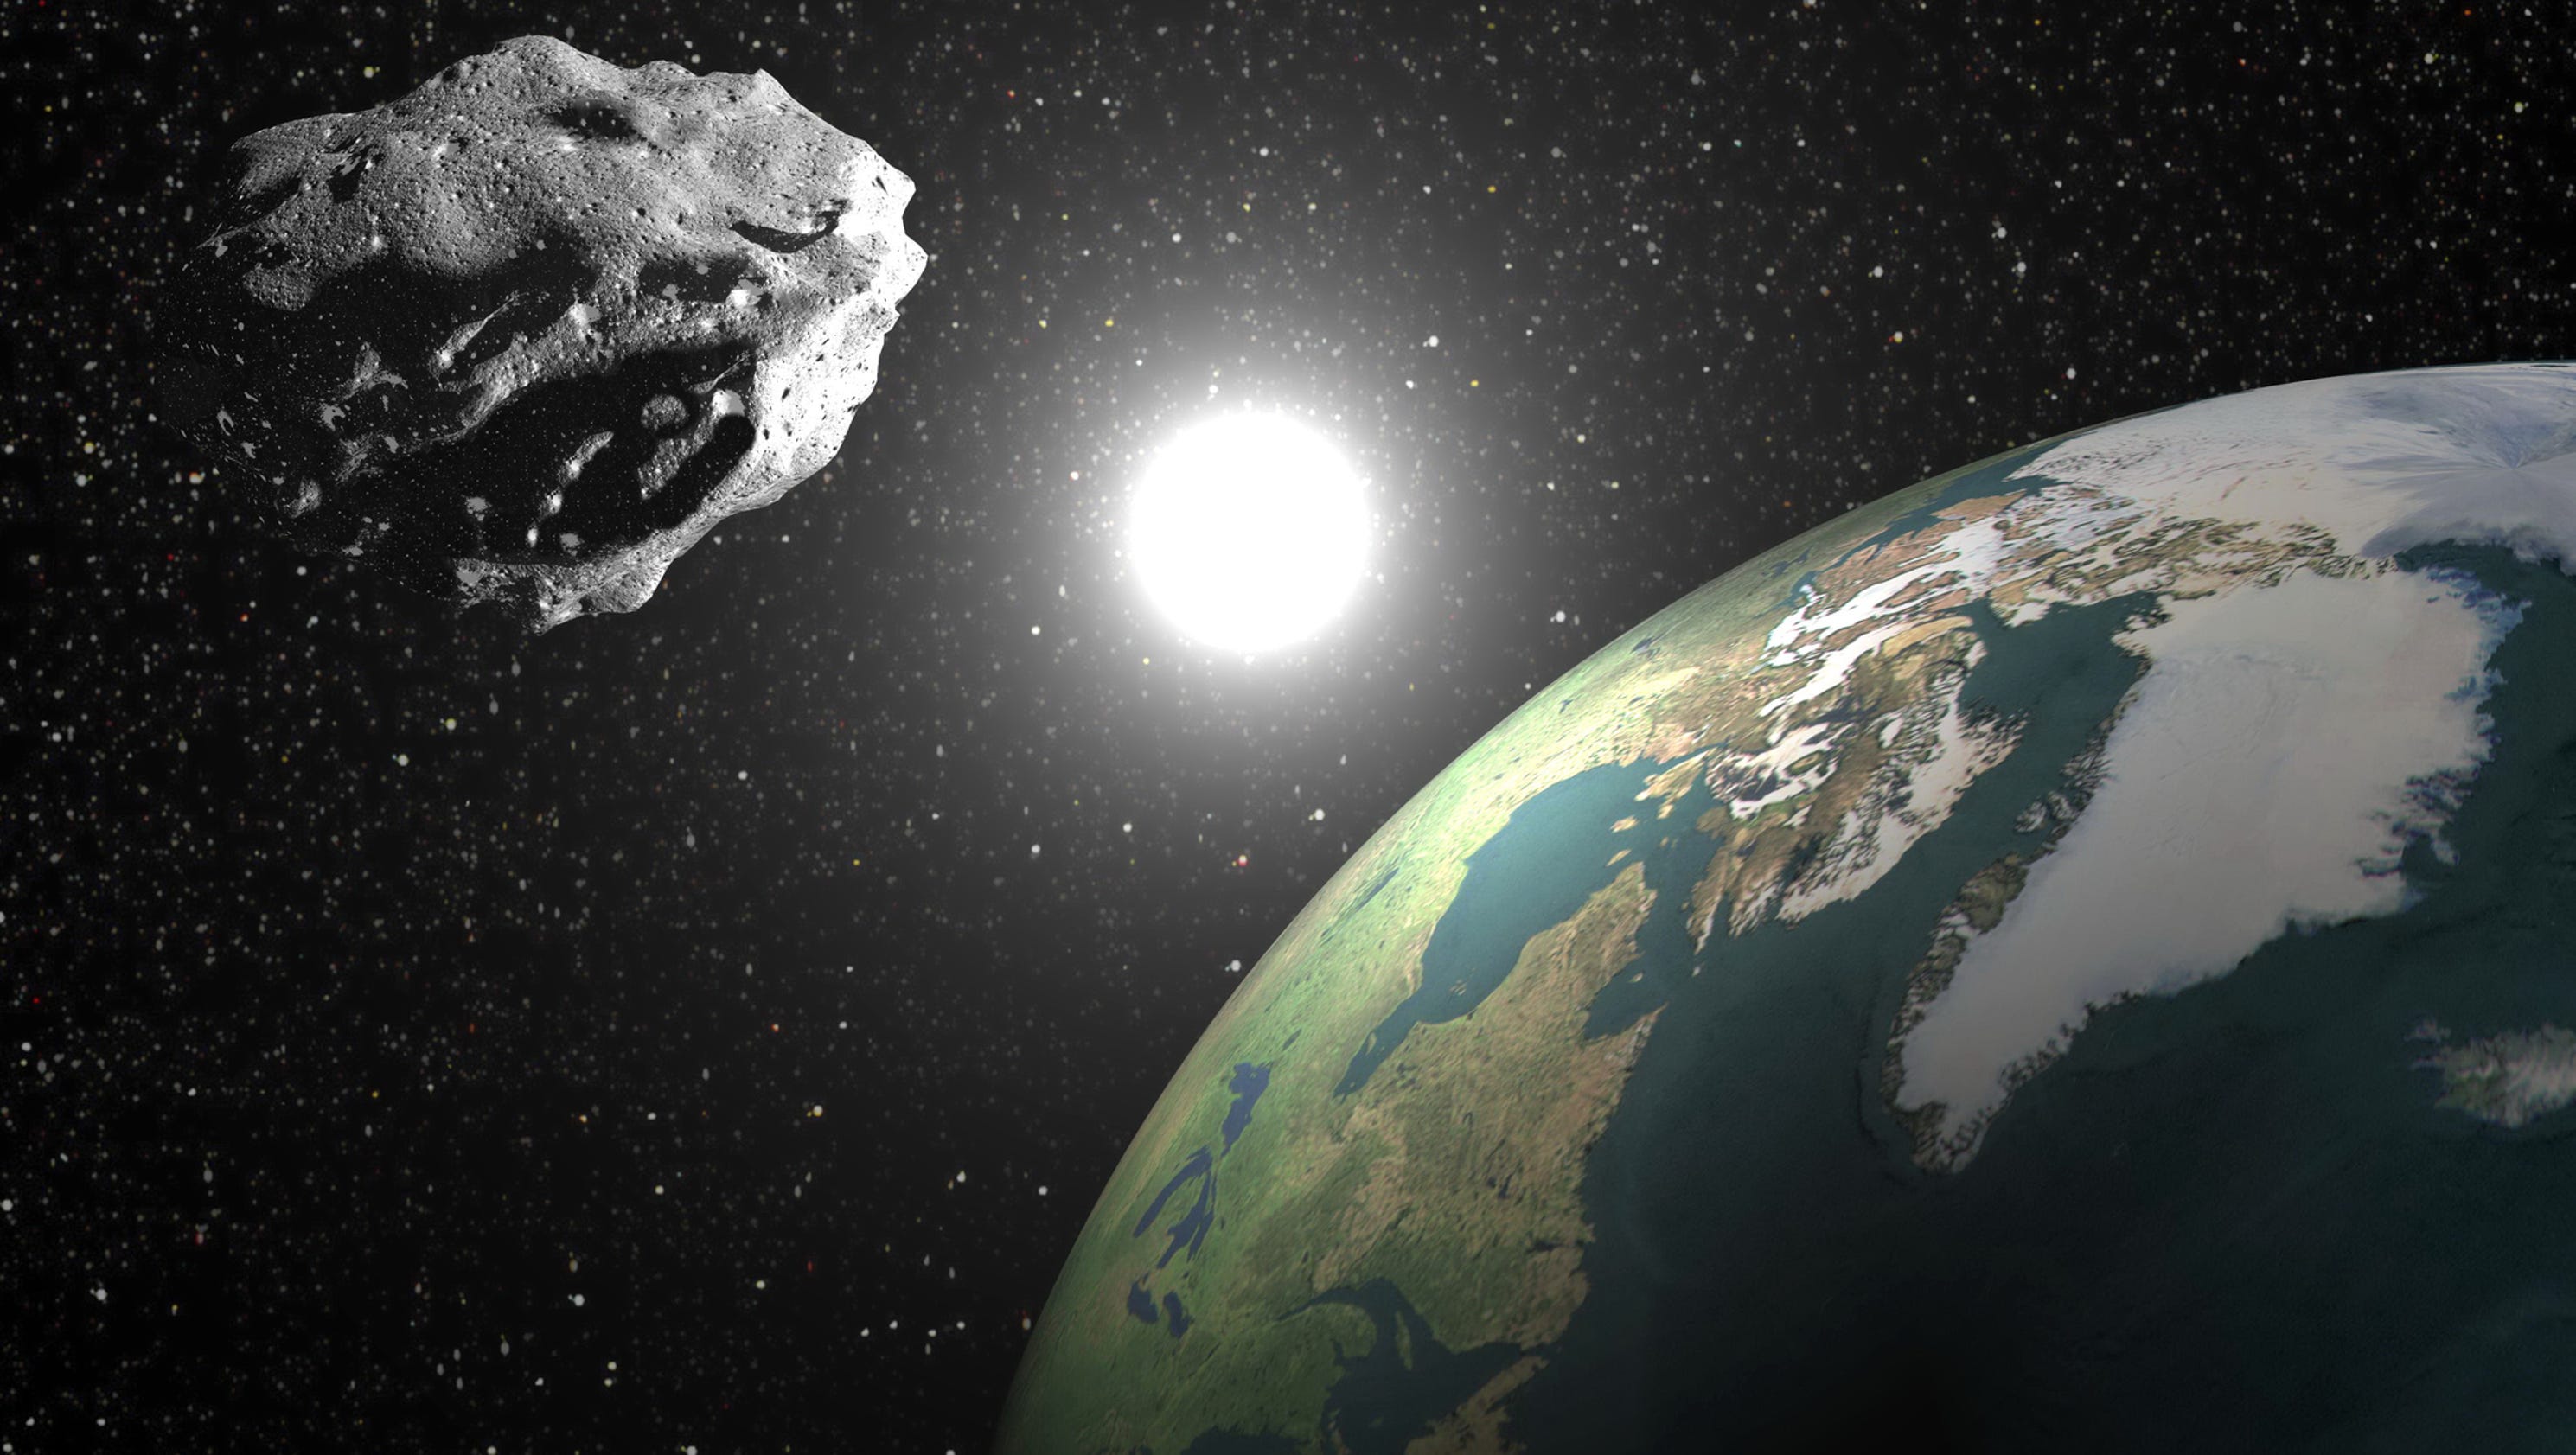 'Potentially Hazardous Asteroid' will pass Earth on Super Bowl Sunday